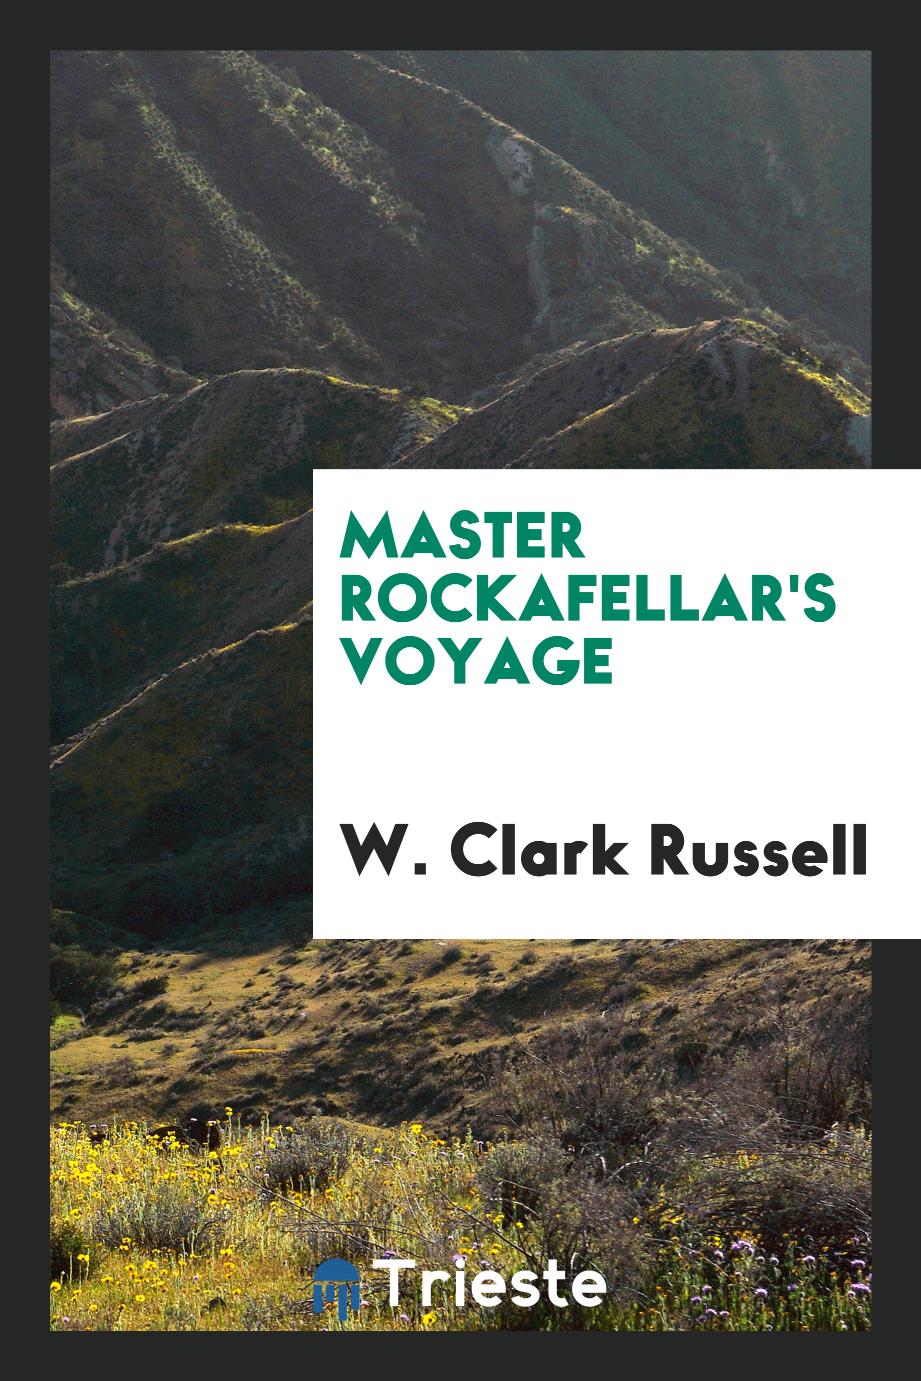 Master Rockafellar's voyage